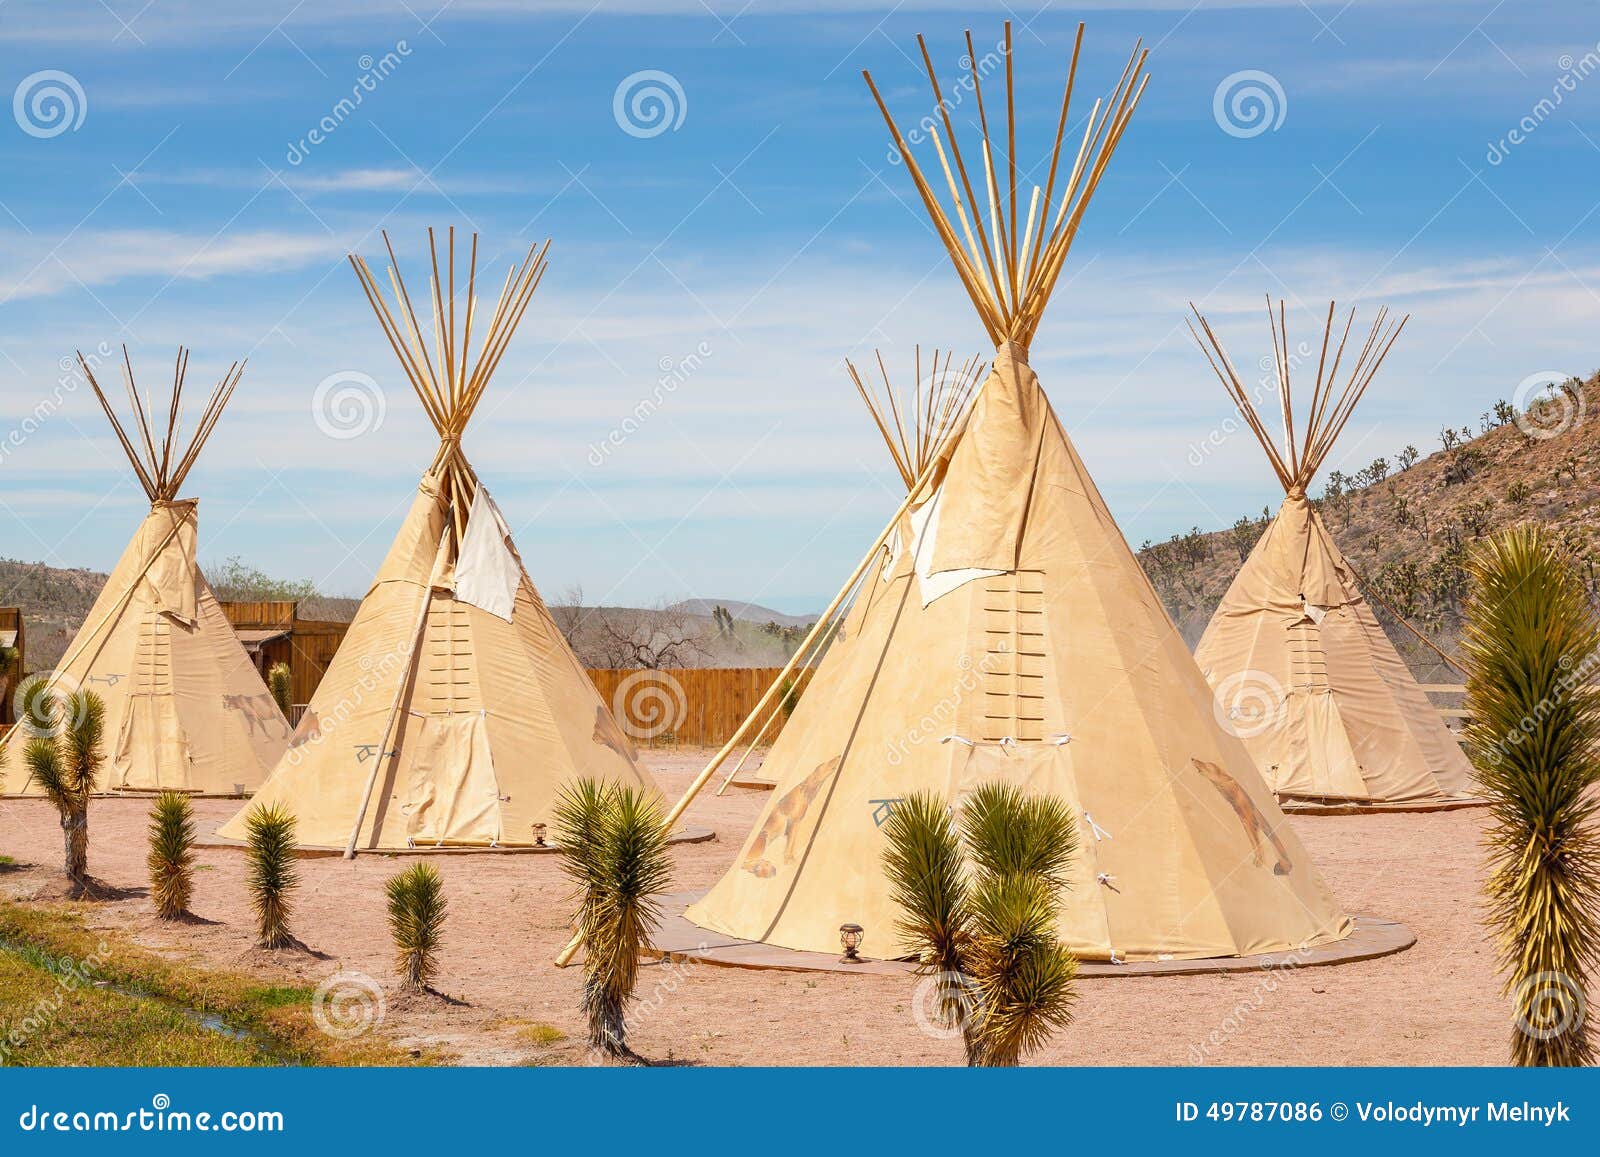 Дом индейца 6. Вигвам индейцев из веток на каркасе. Дом индейцев. Вигвамы индейские дома фото картинки. Дома коренных американцев.